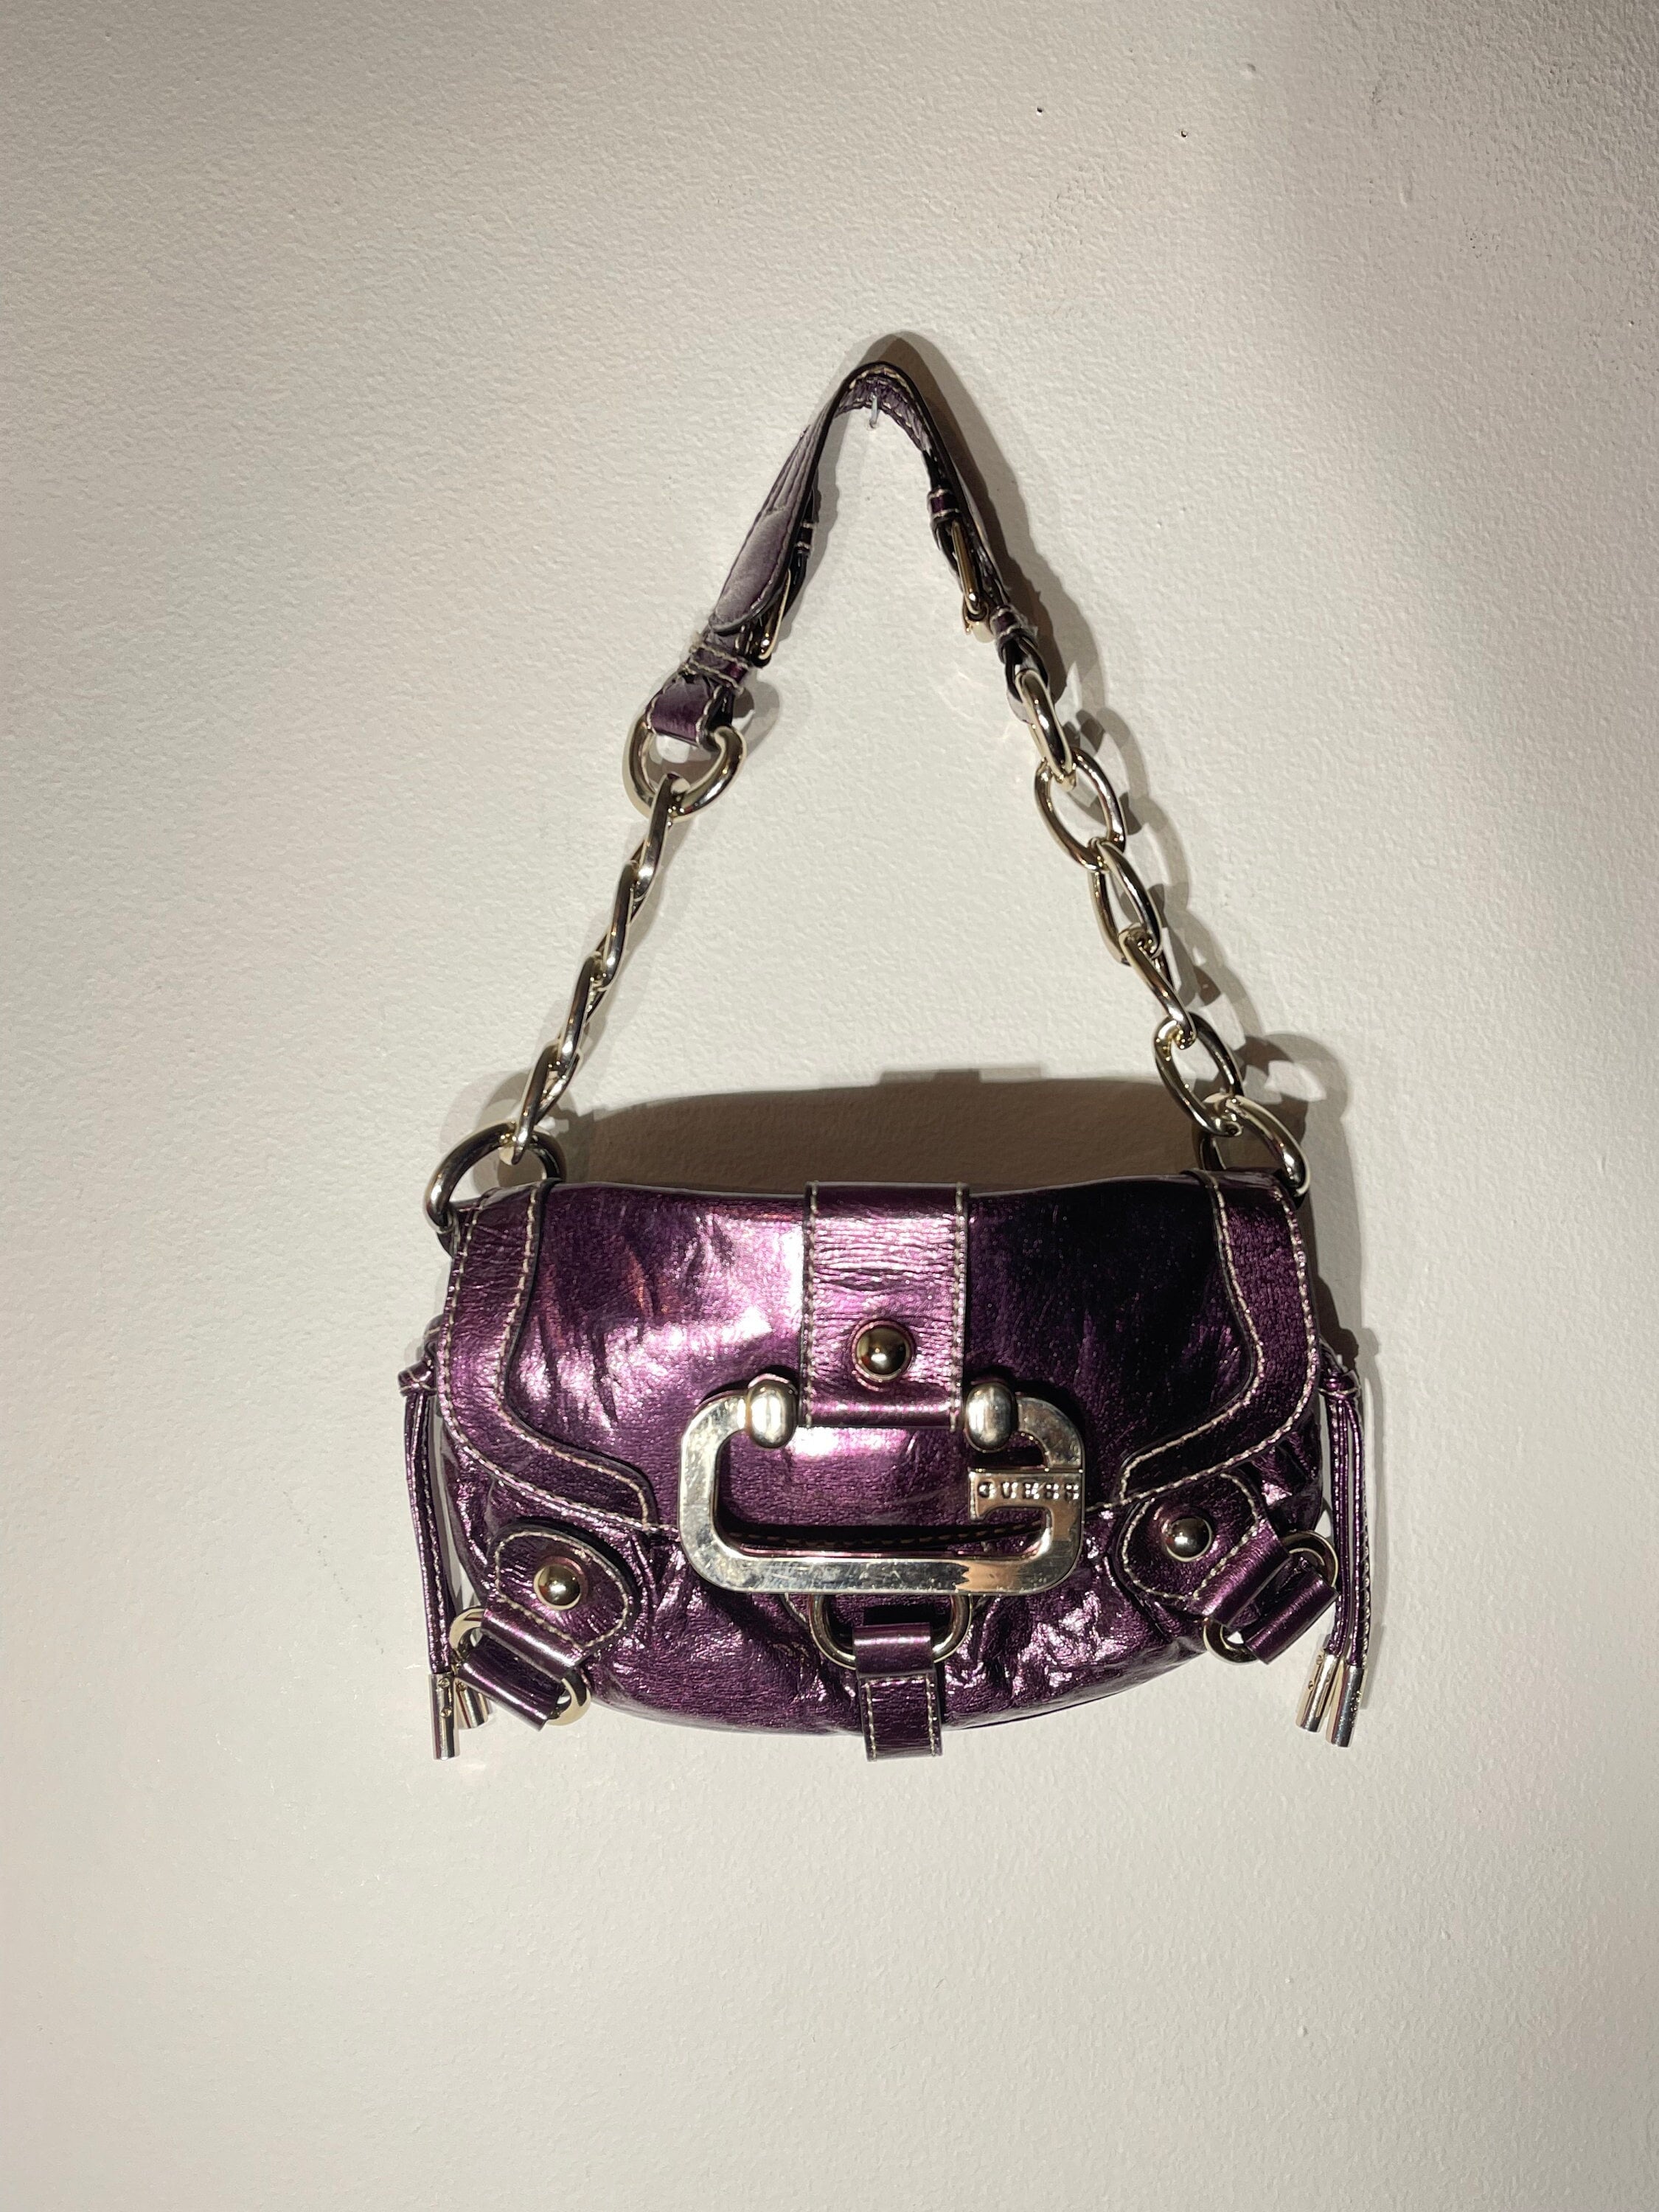 GUESS Little Bay Shoulder Bag, Black: Handbags: Amazon.com